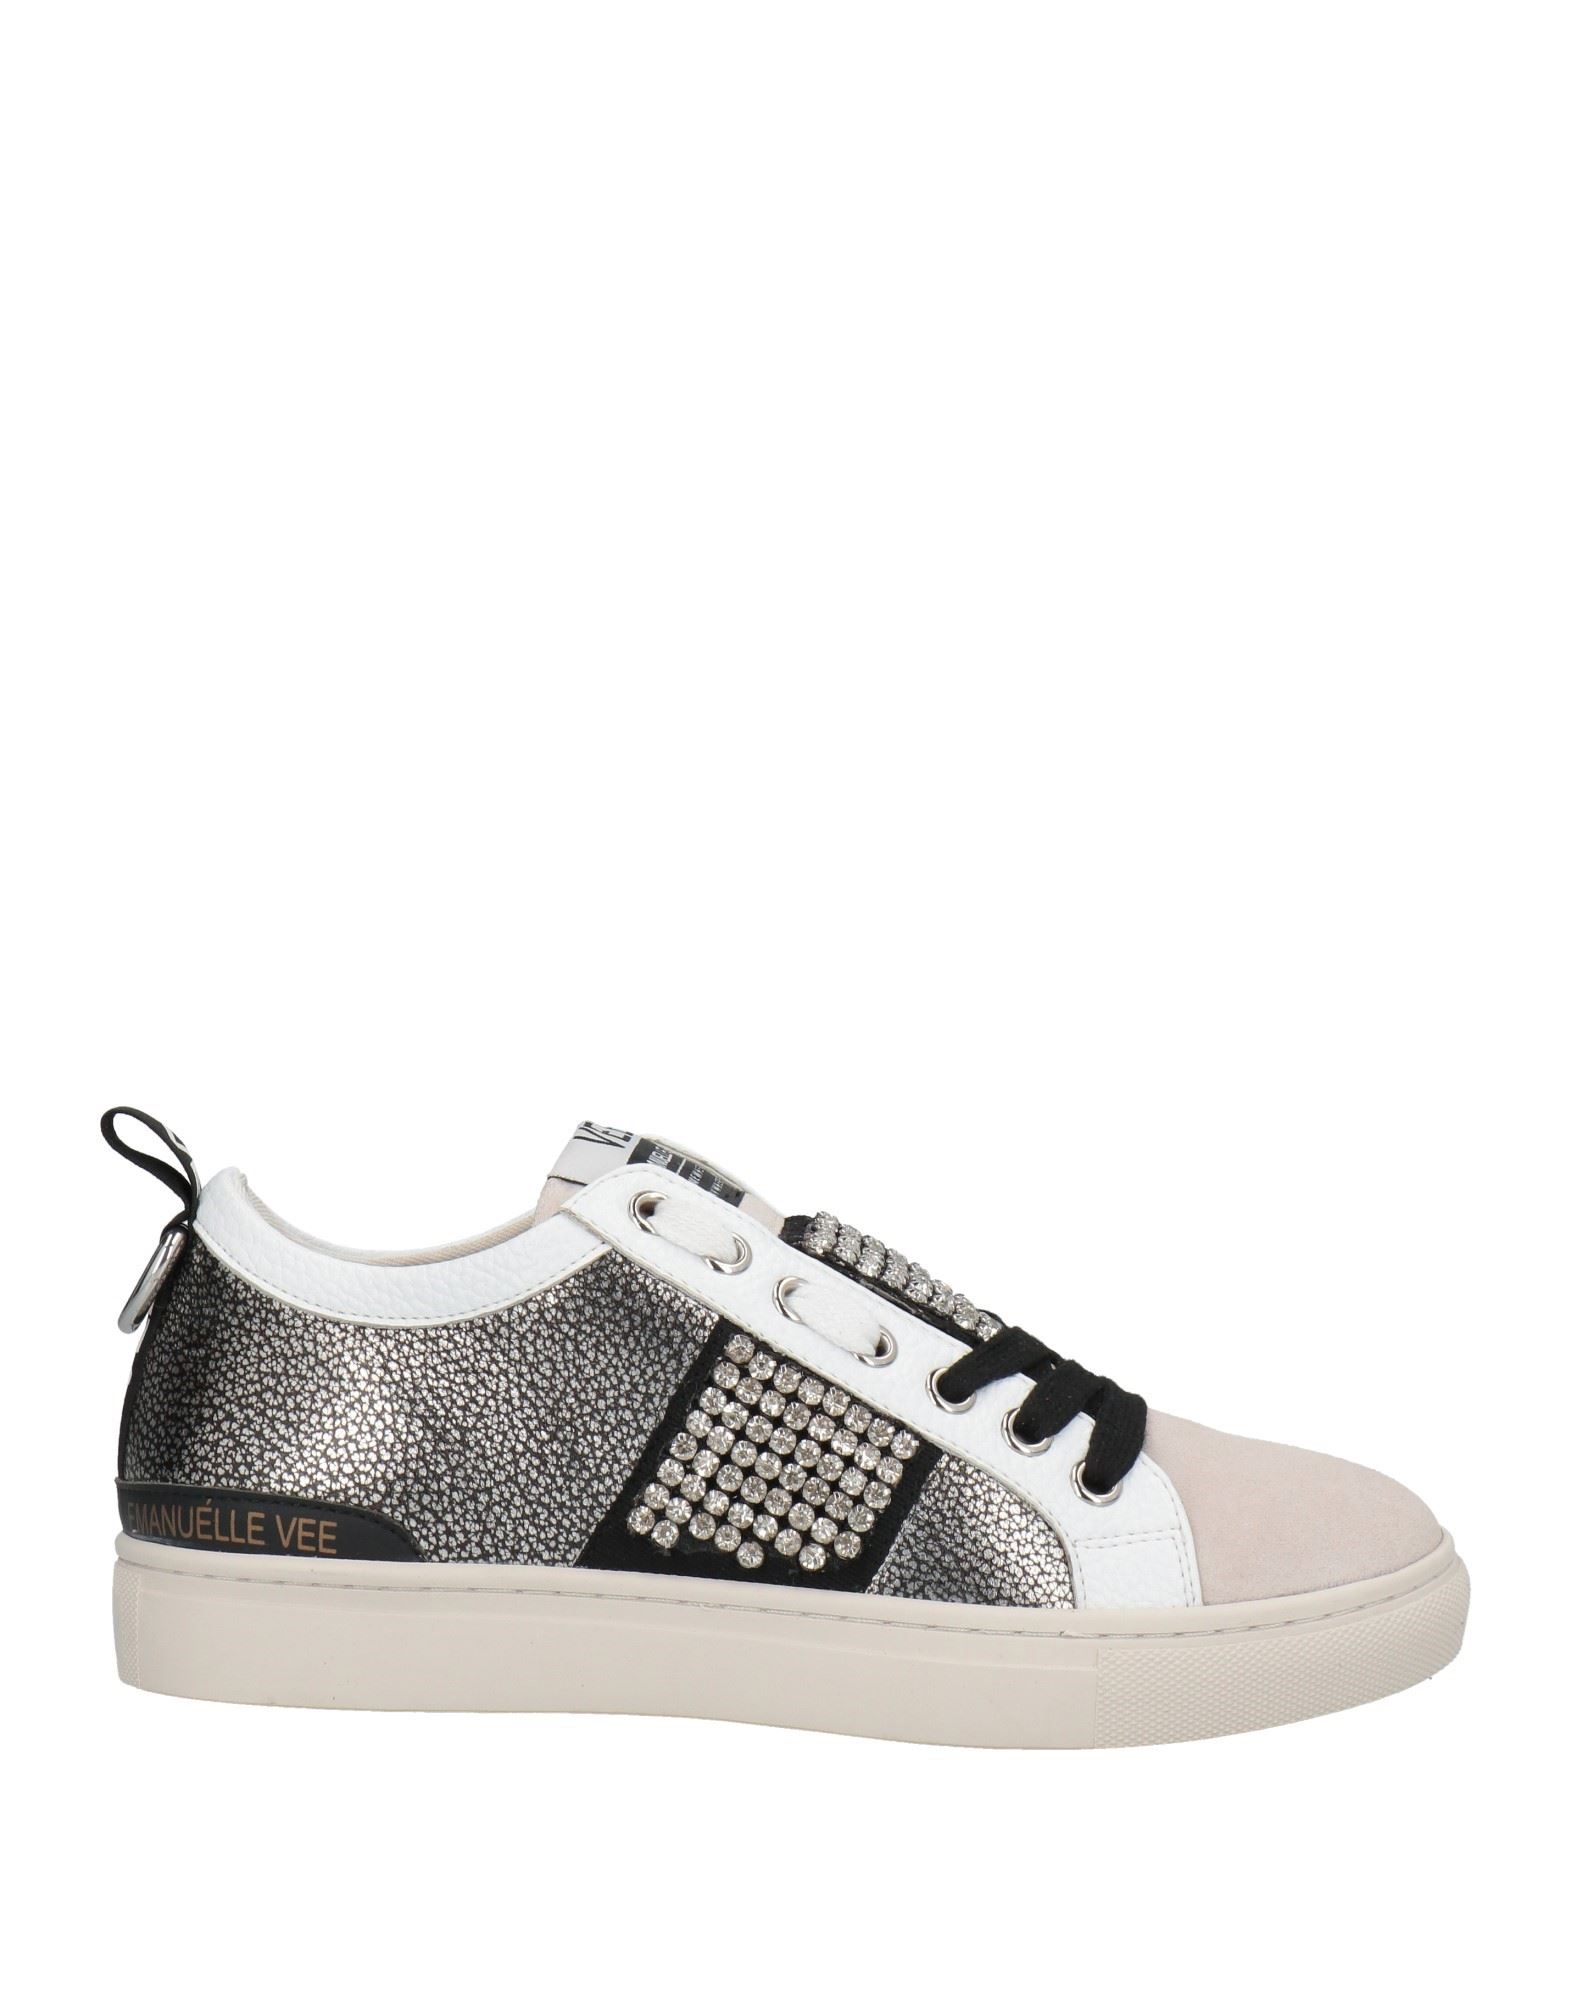 Emanuélle Vee Sneakers In Silver | ModeSens